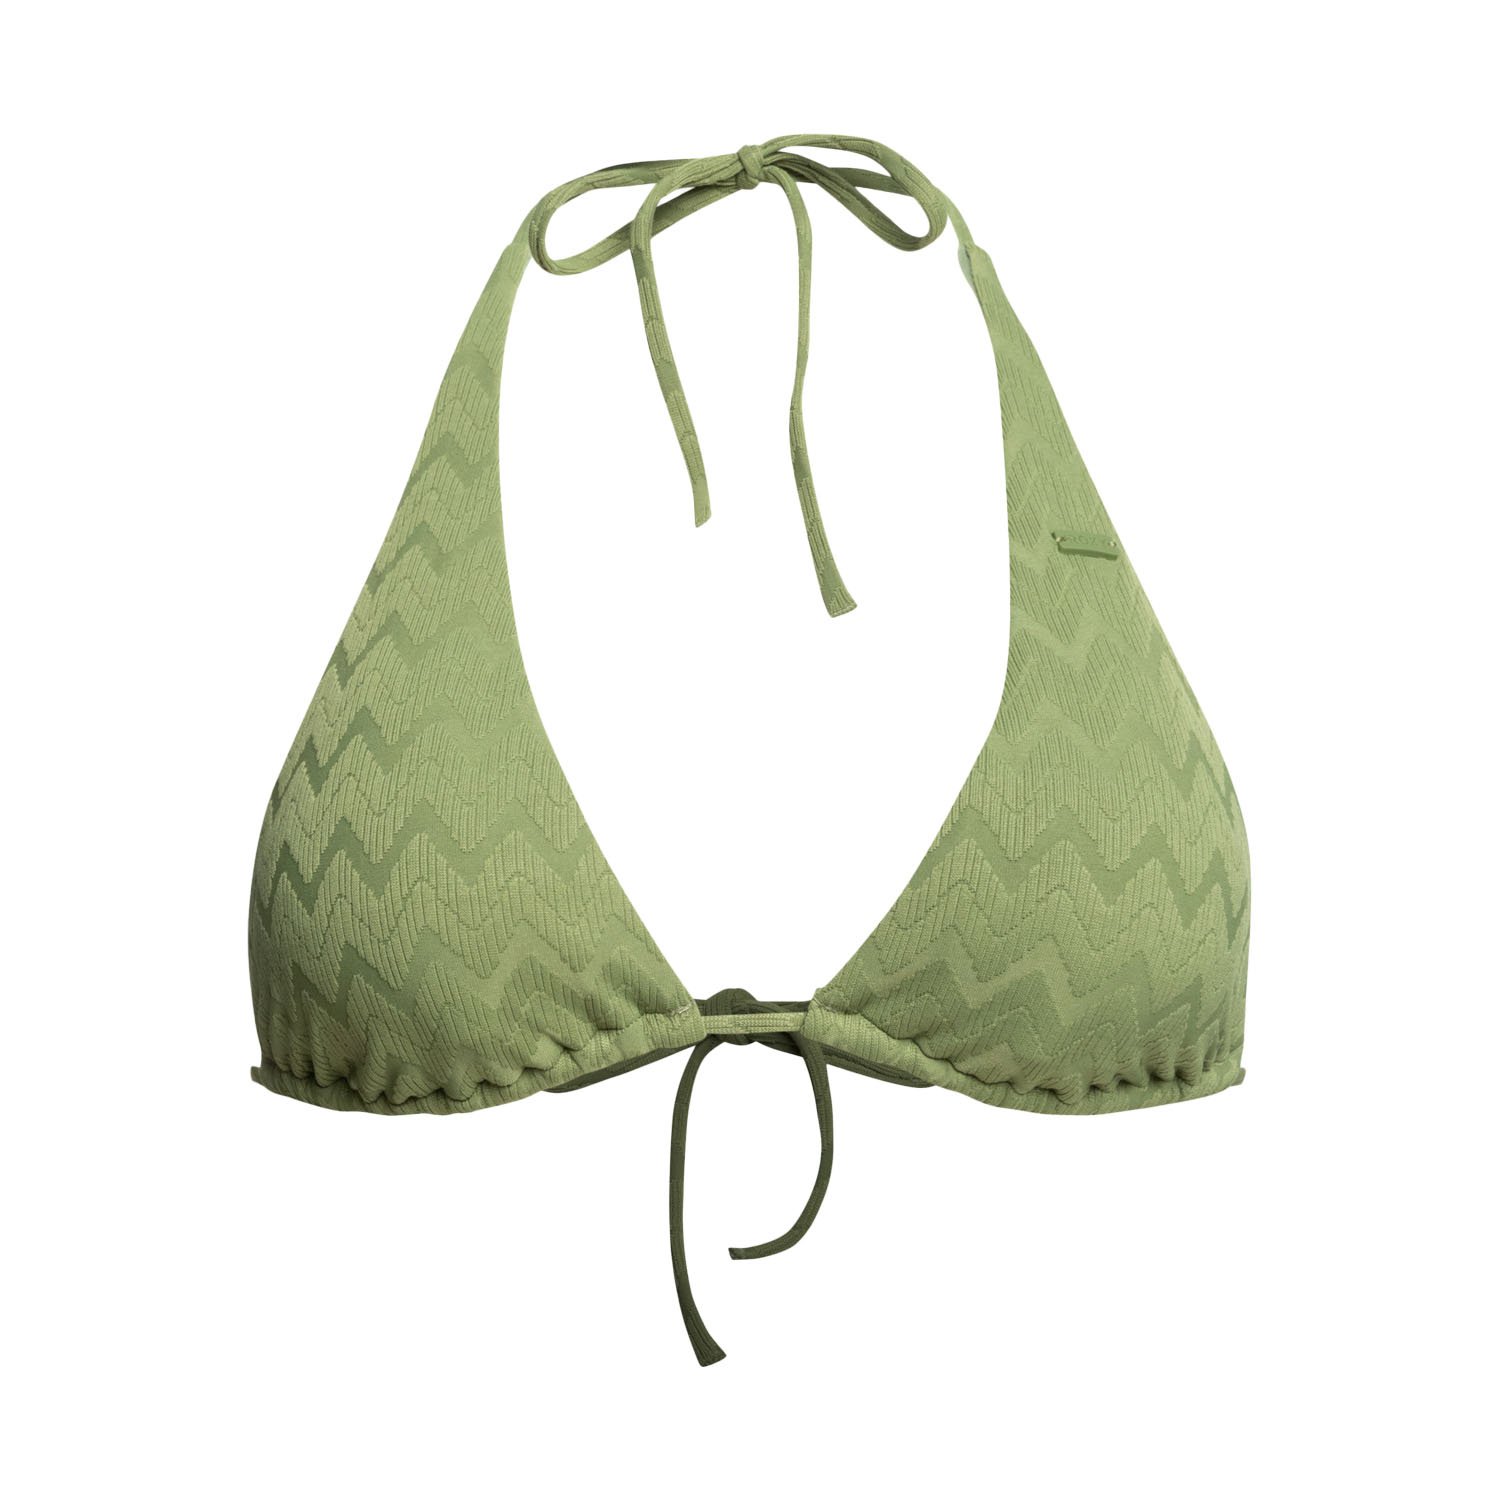 Roxy Current Coolness Elongated Tri Kadın Bikini Üstü - Yeşil - 1